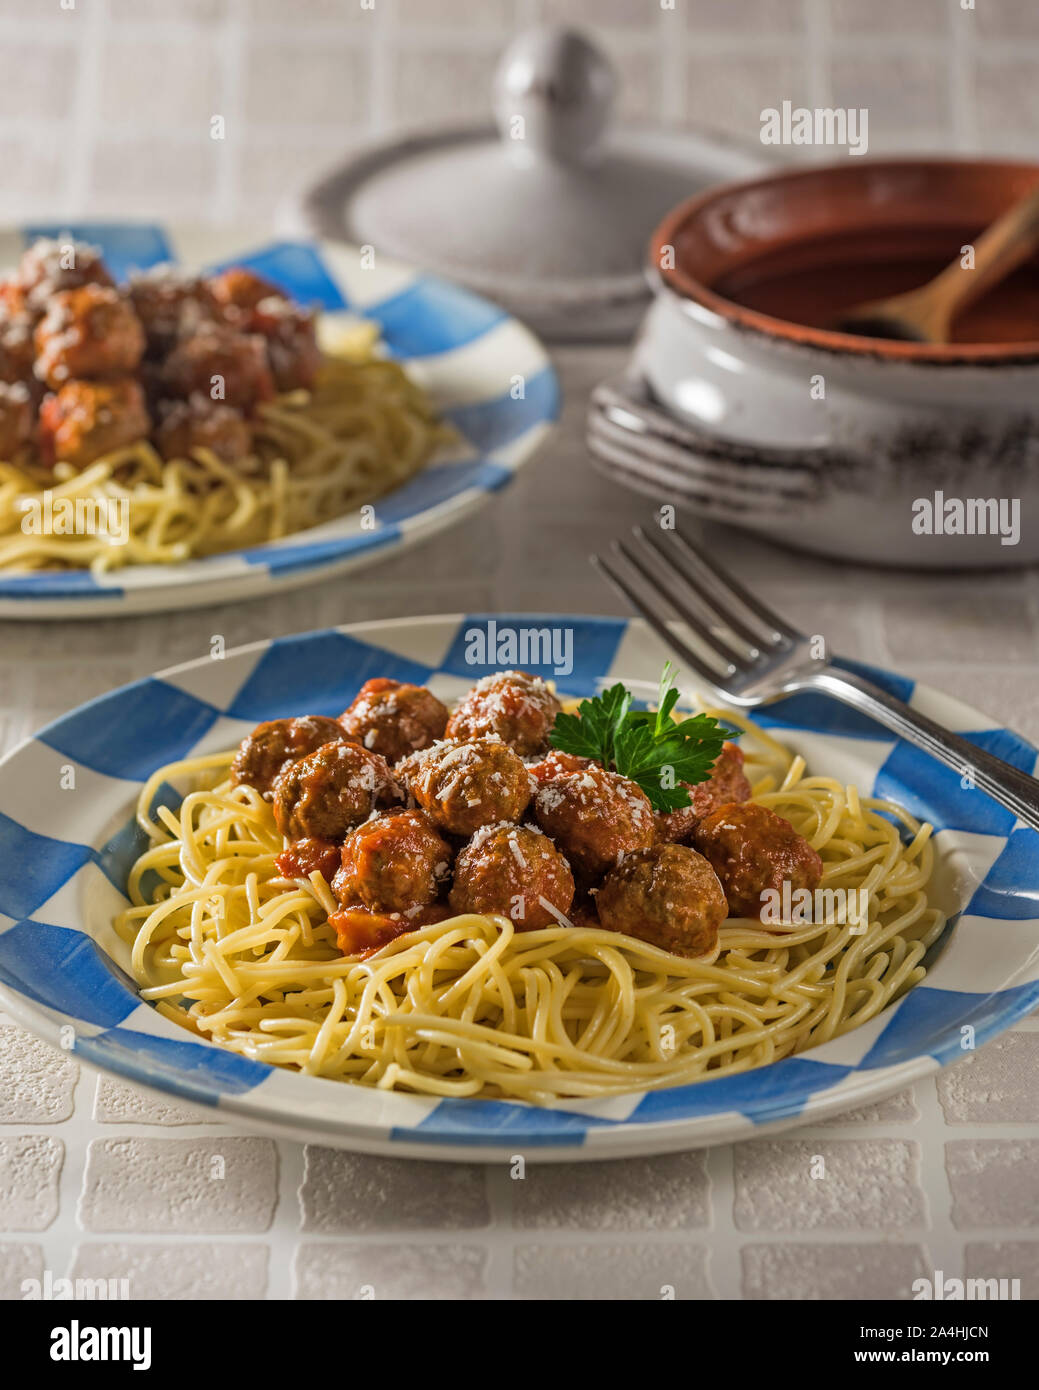 Spaghetti and meatballs. Italian-American food Stock Photo